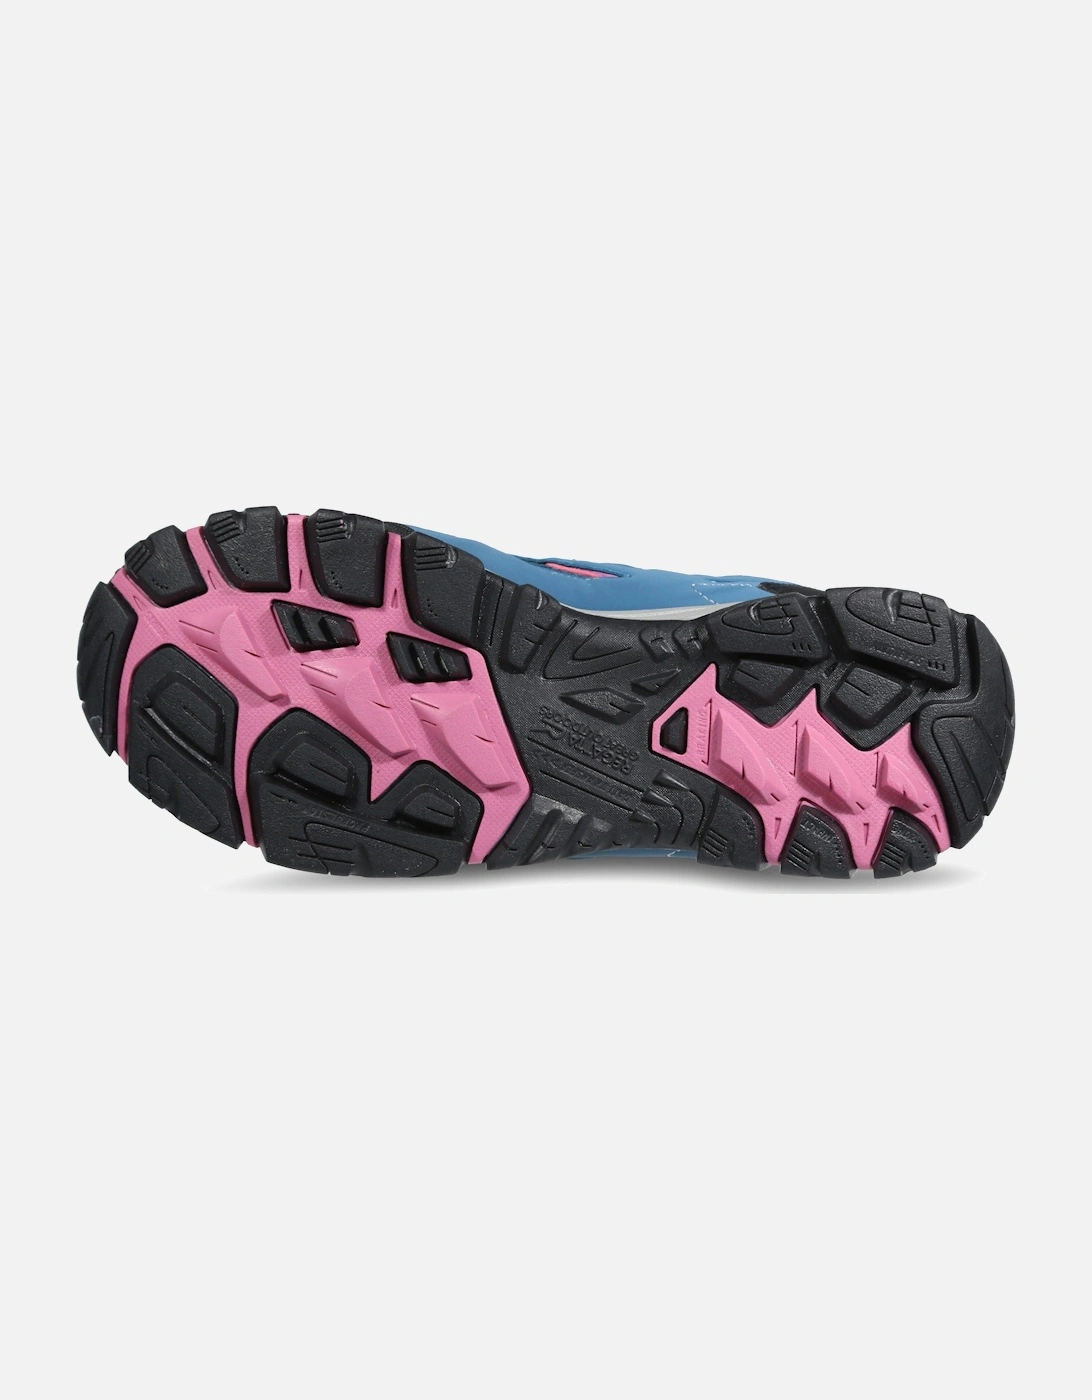 Womens Holcombe Waterproof Mid Walking Boots